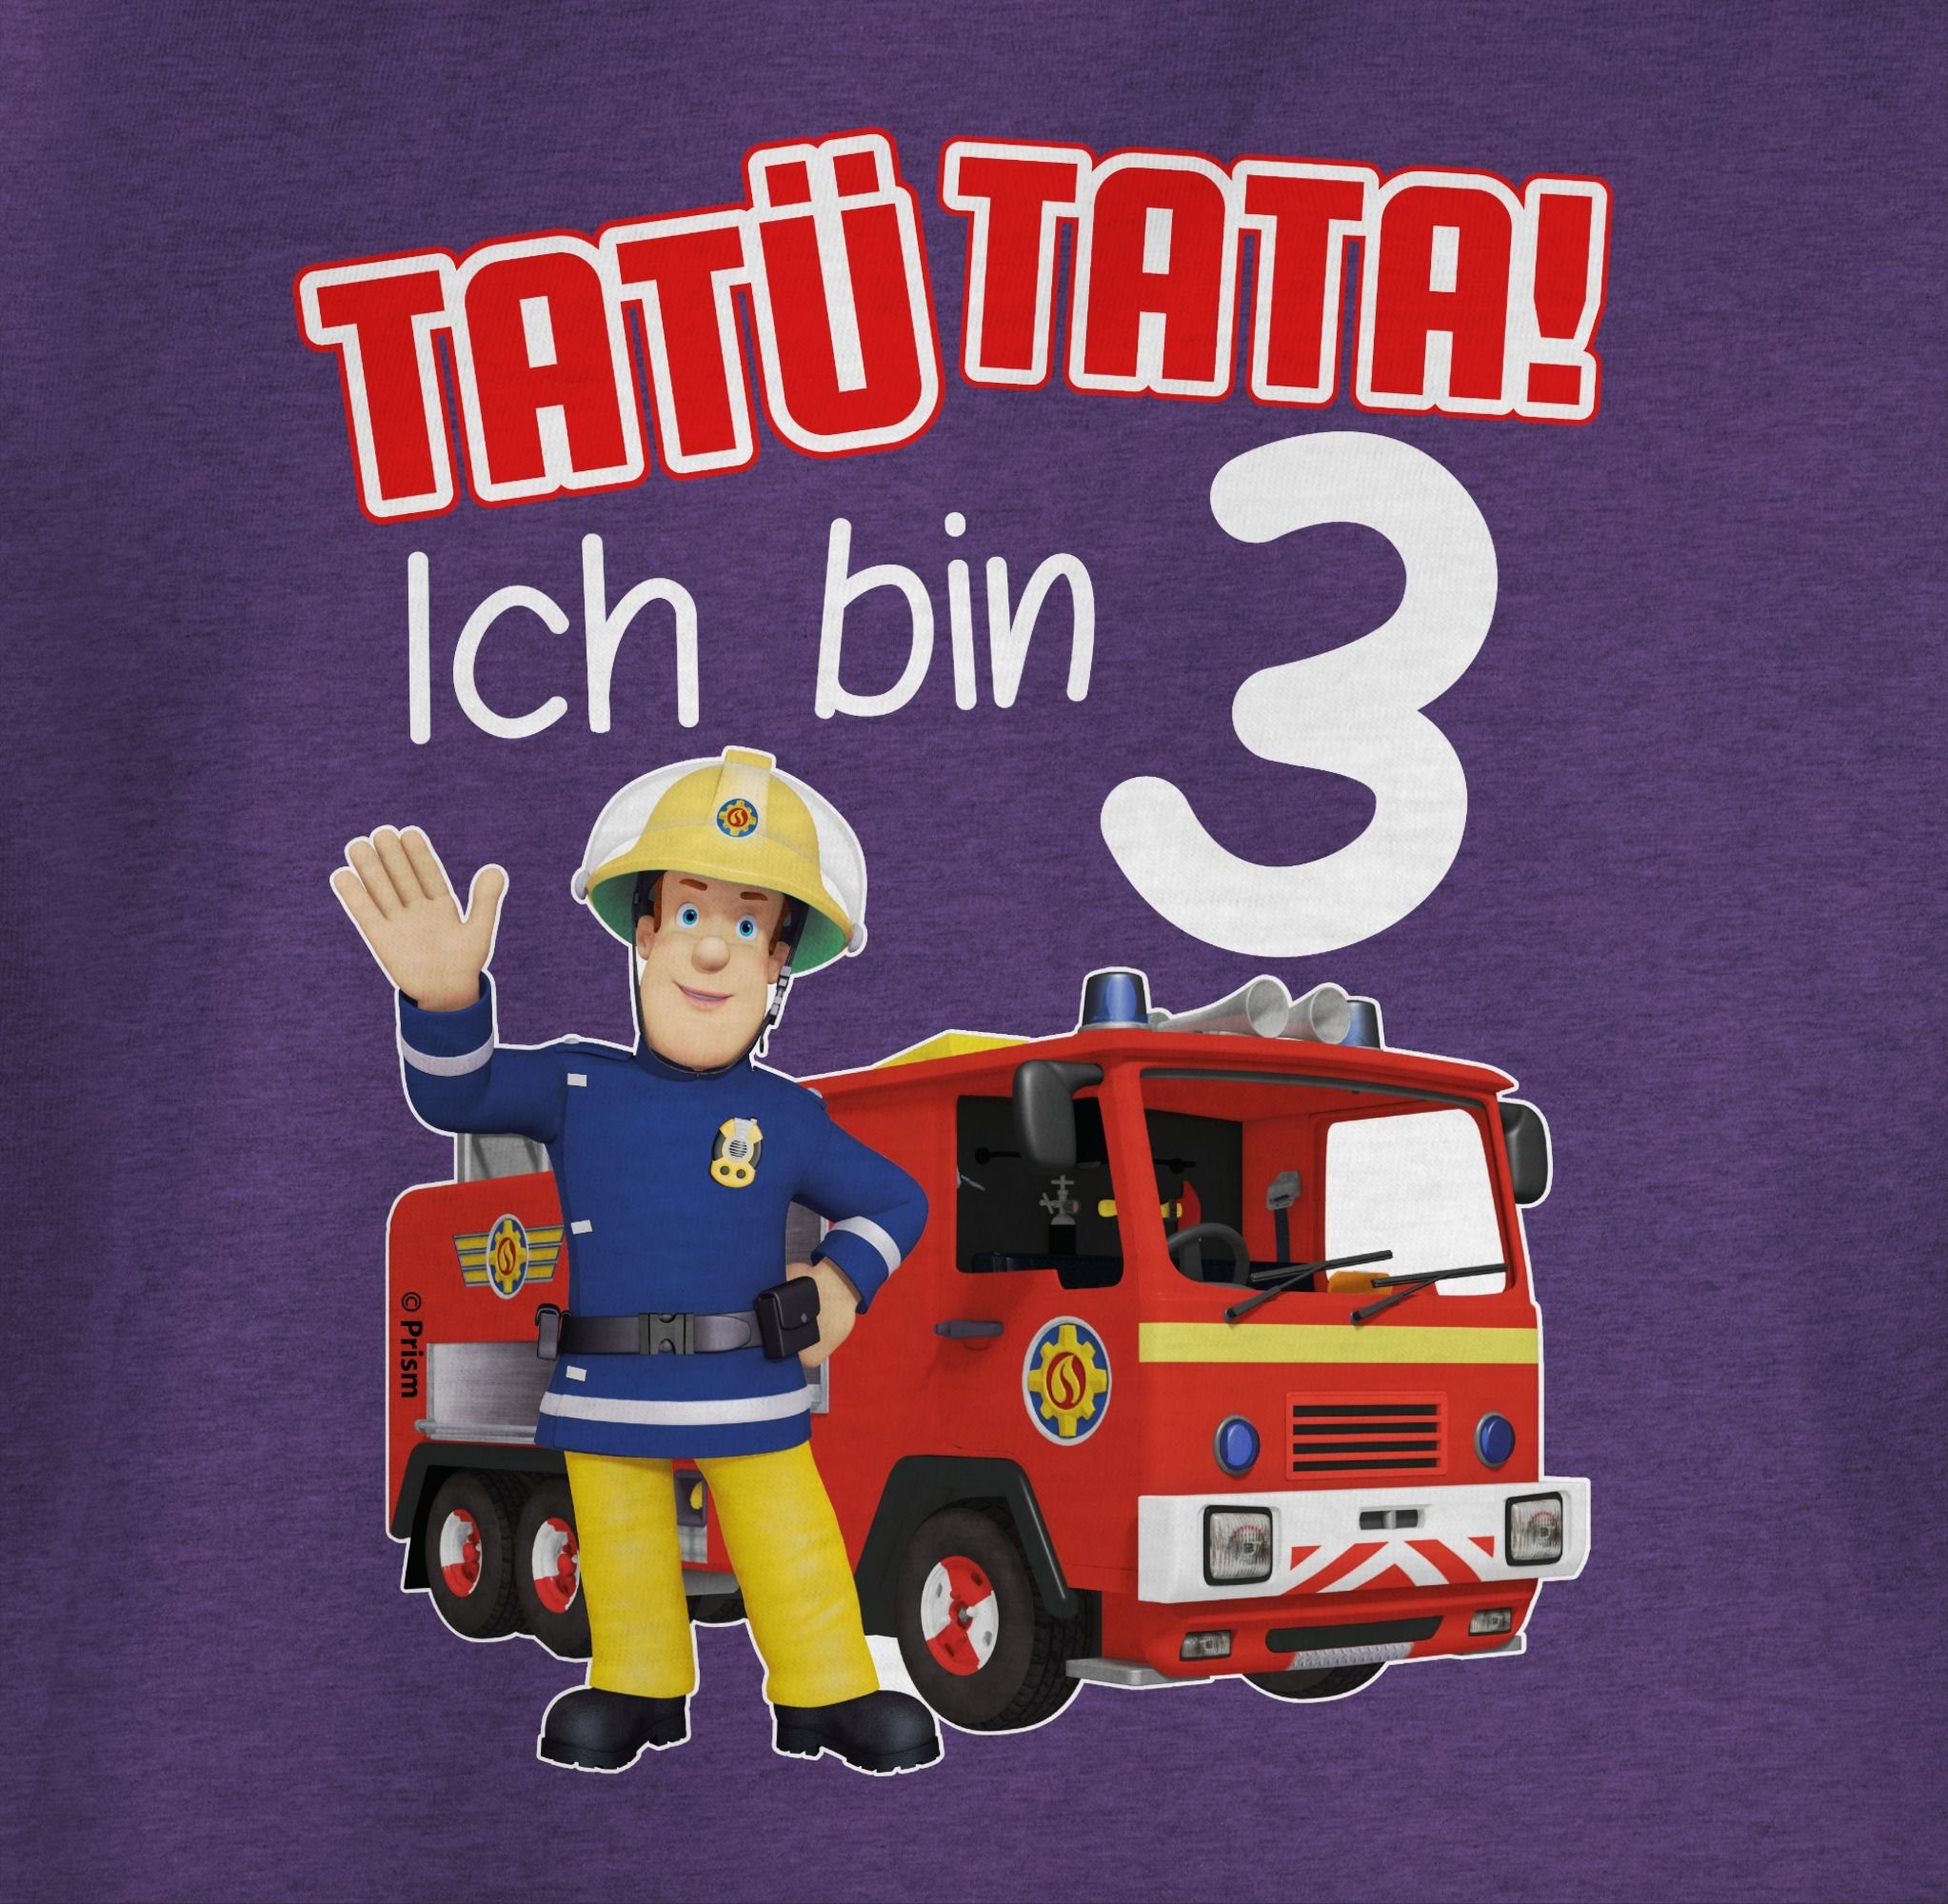 Ich Sam 2 Tatü bin Shirtracer Lila T-Shirt 3 Feuerwehrmann Geburtstag Mädchen Tata! Meliert